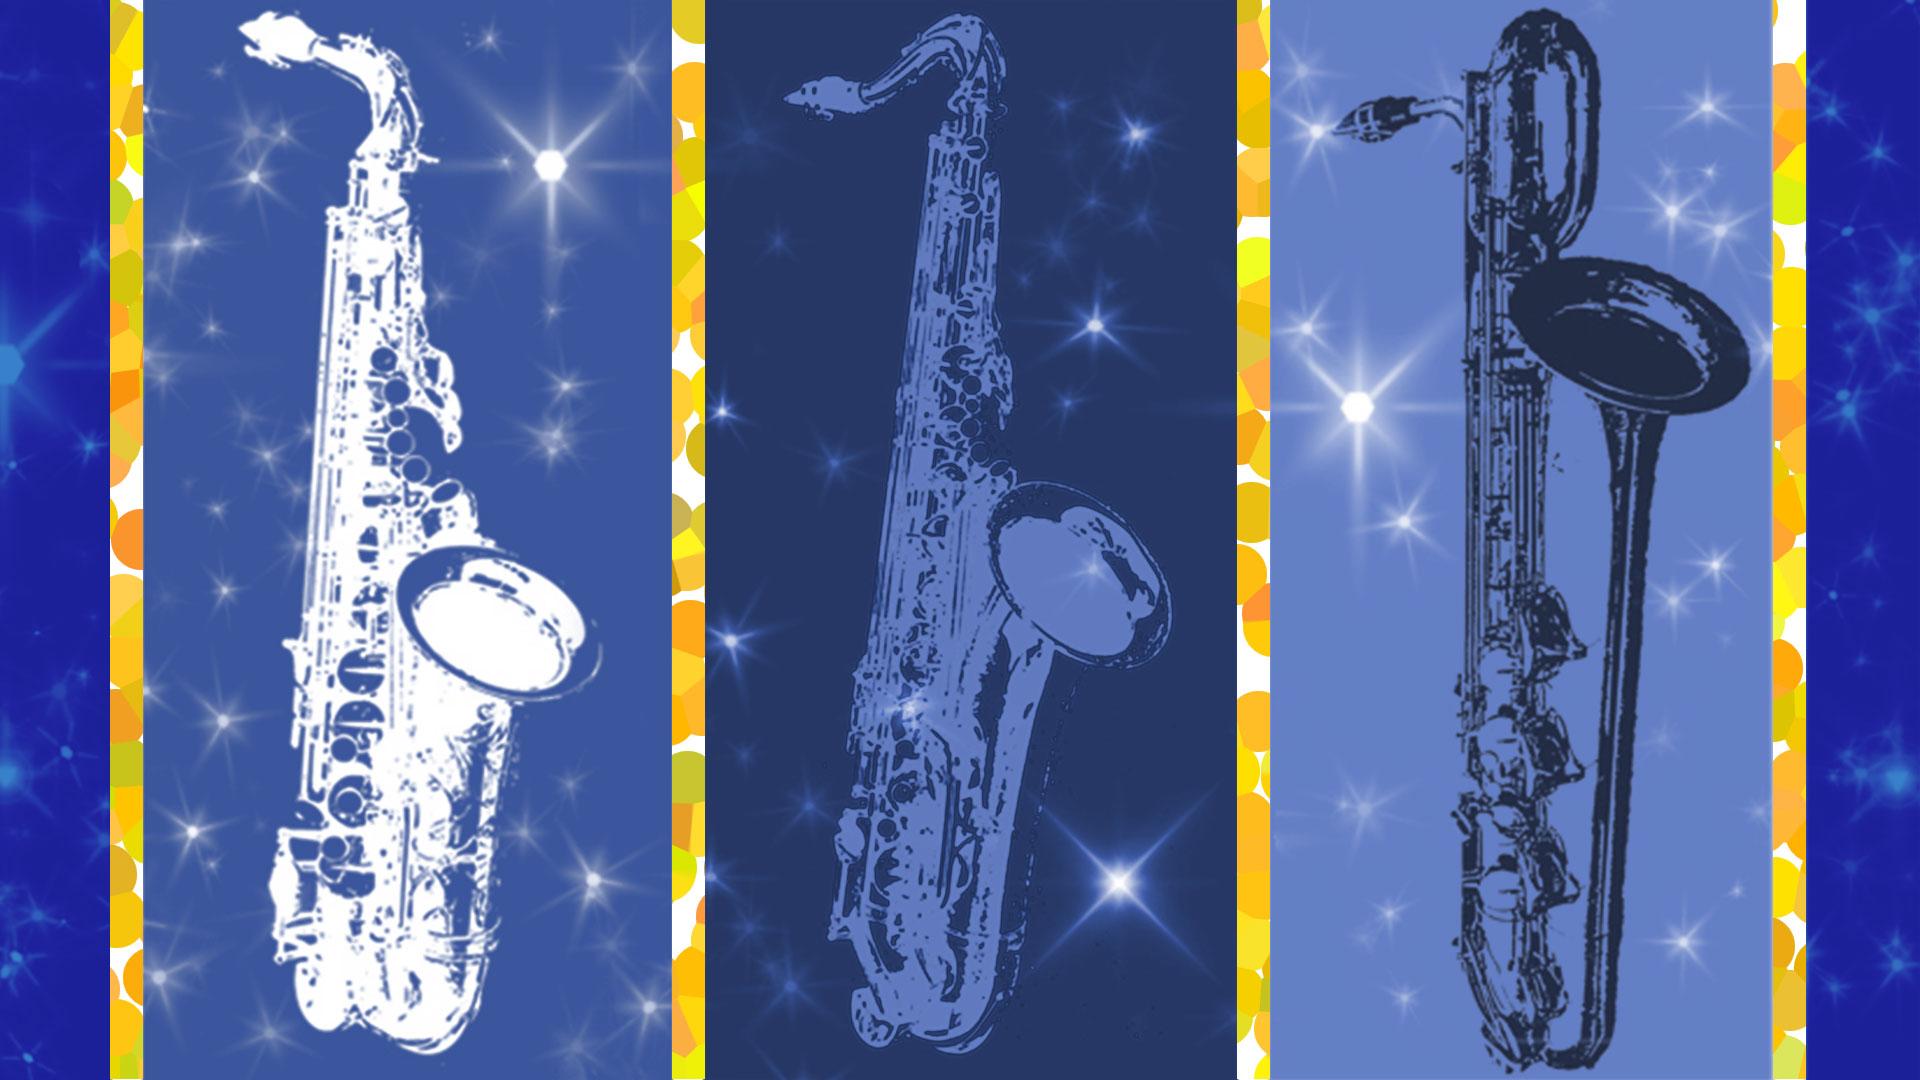 illustration of 3 saxophones on blue background with sparkles